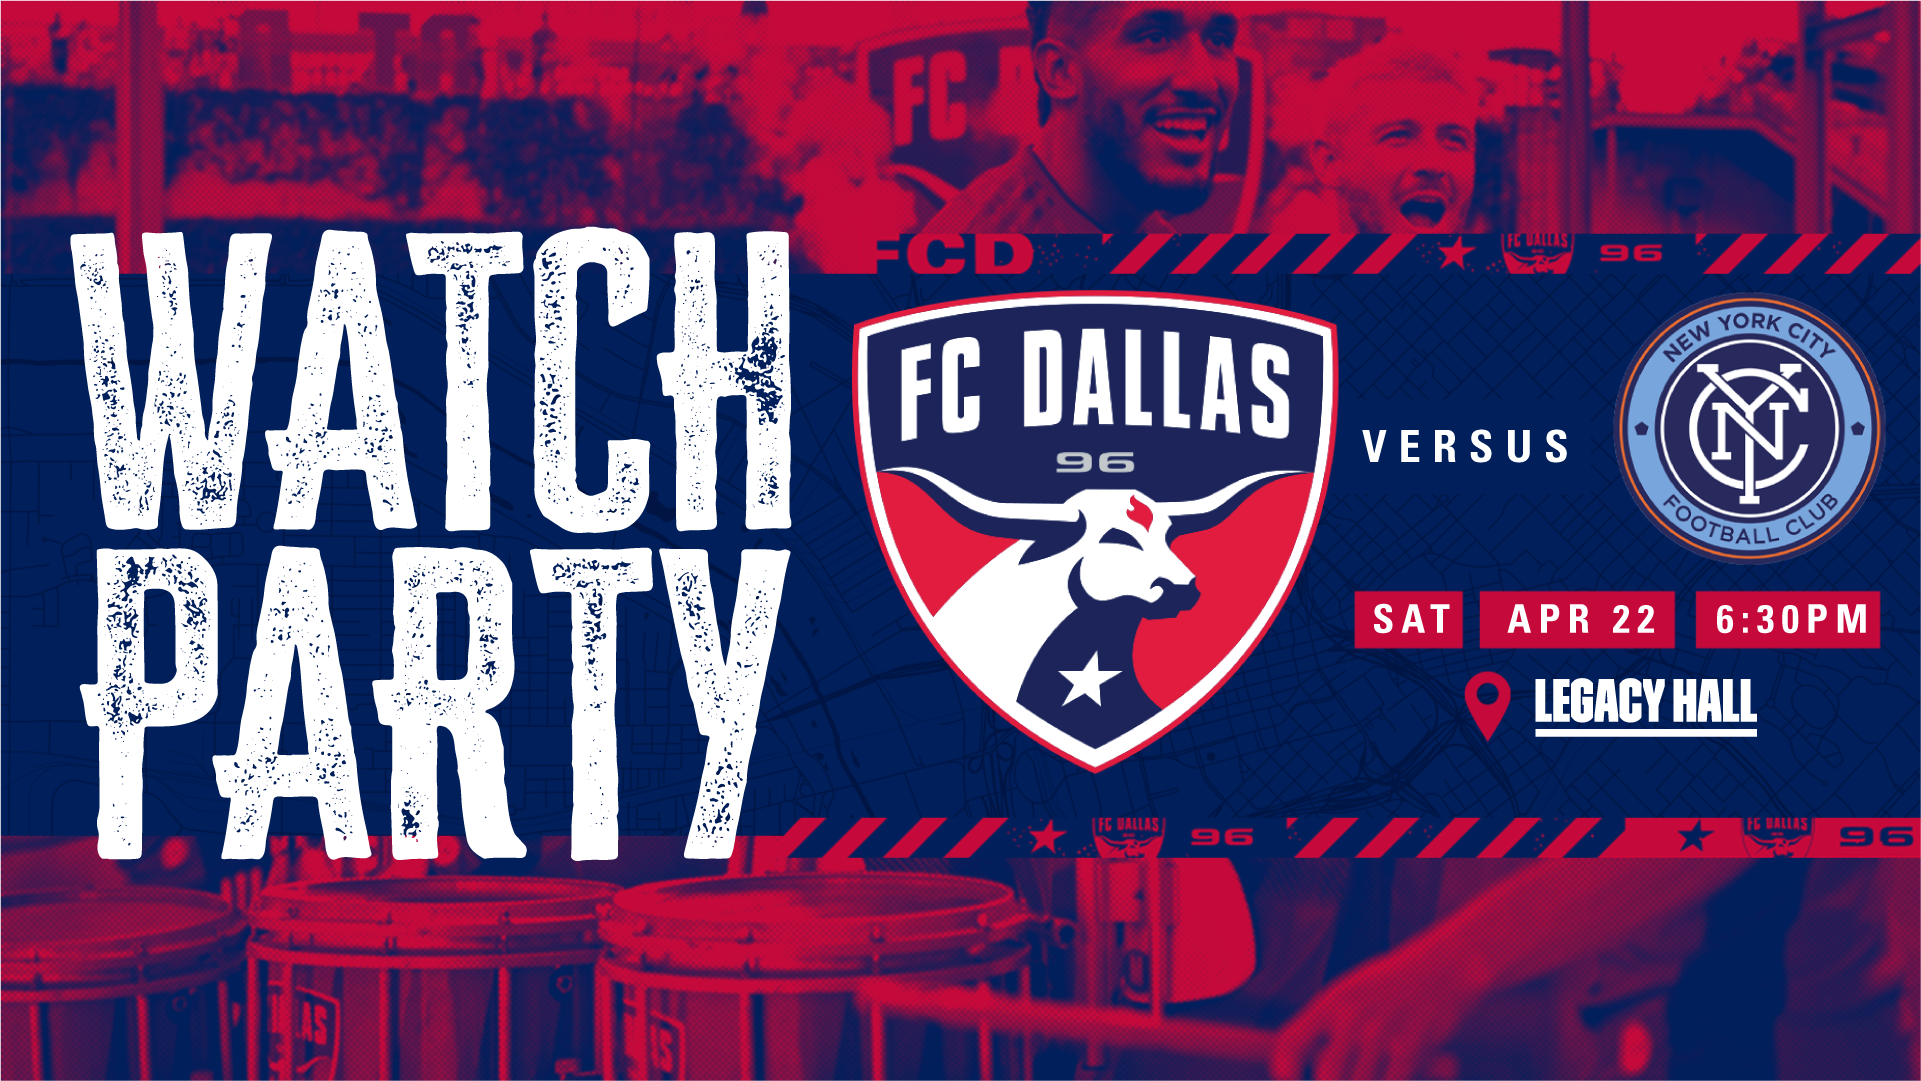 FC Dallas VS New York City Watch Party - hero